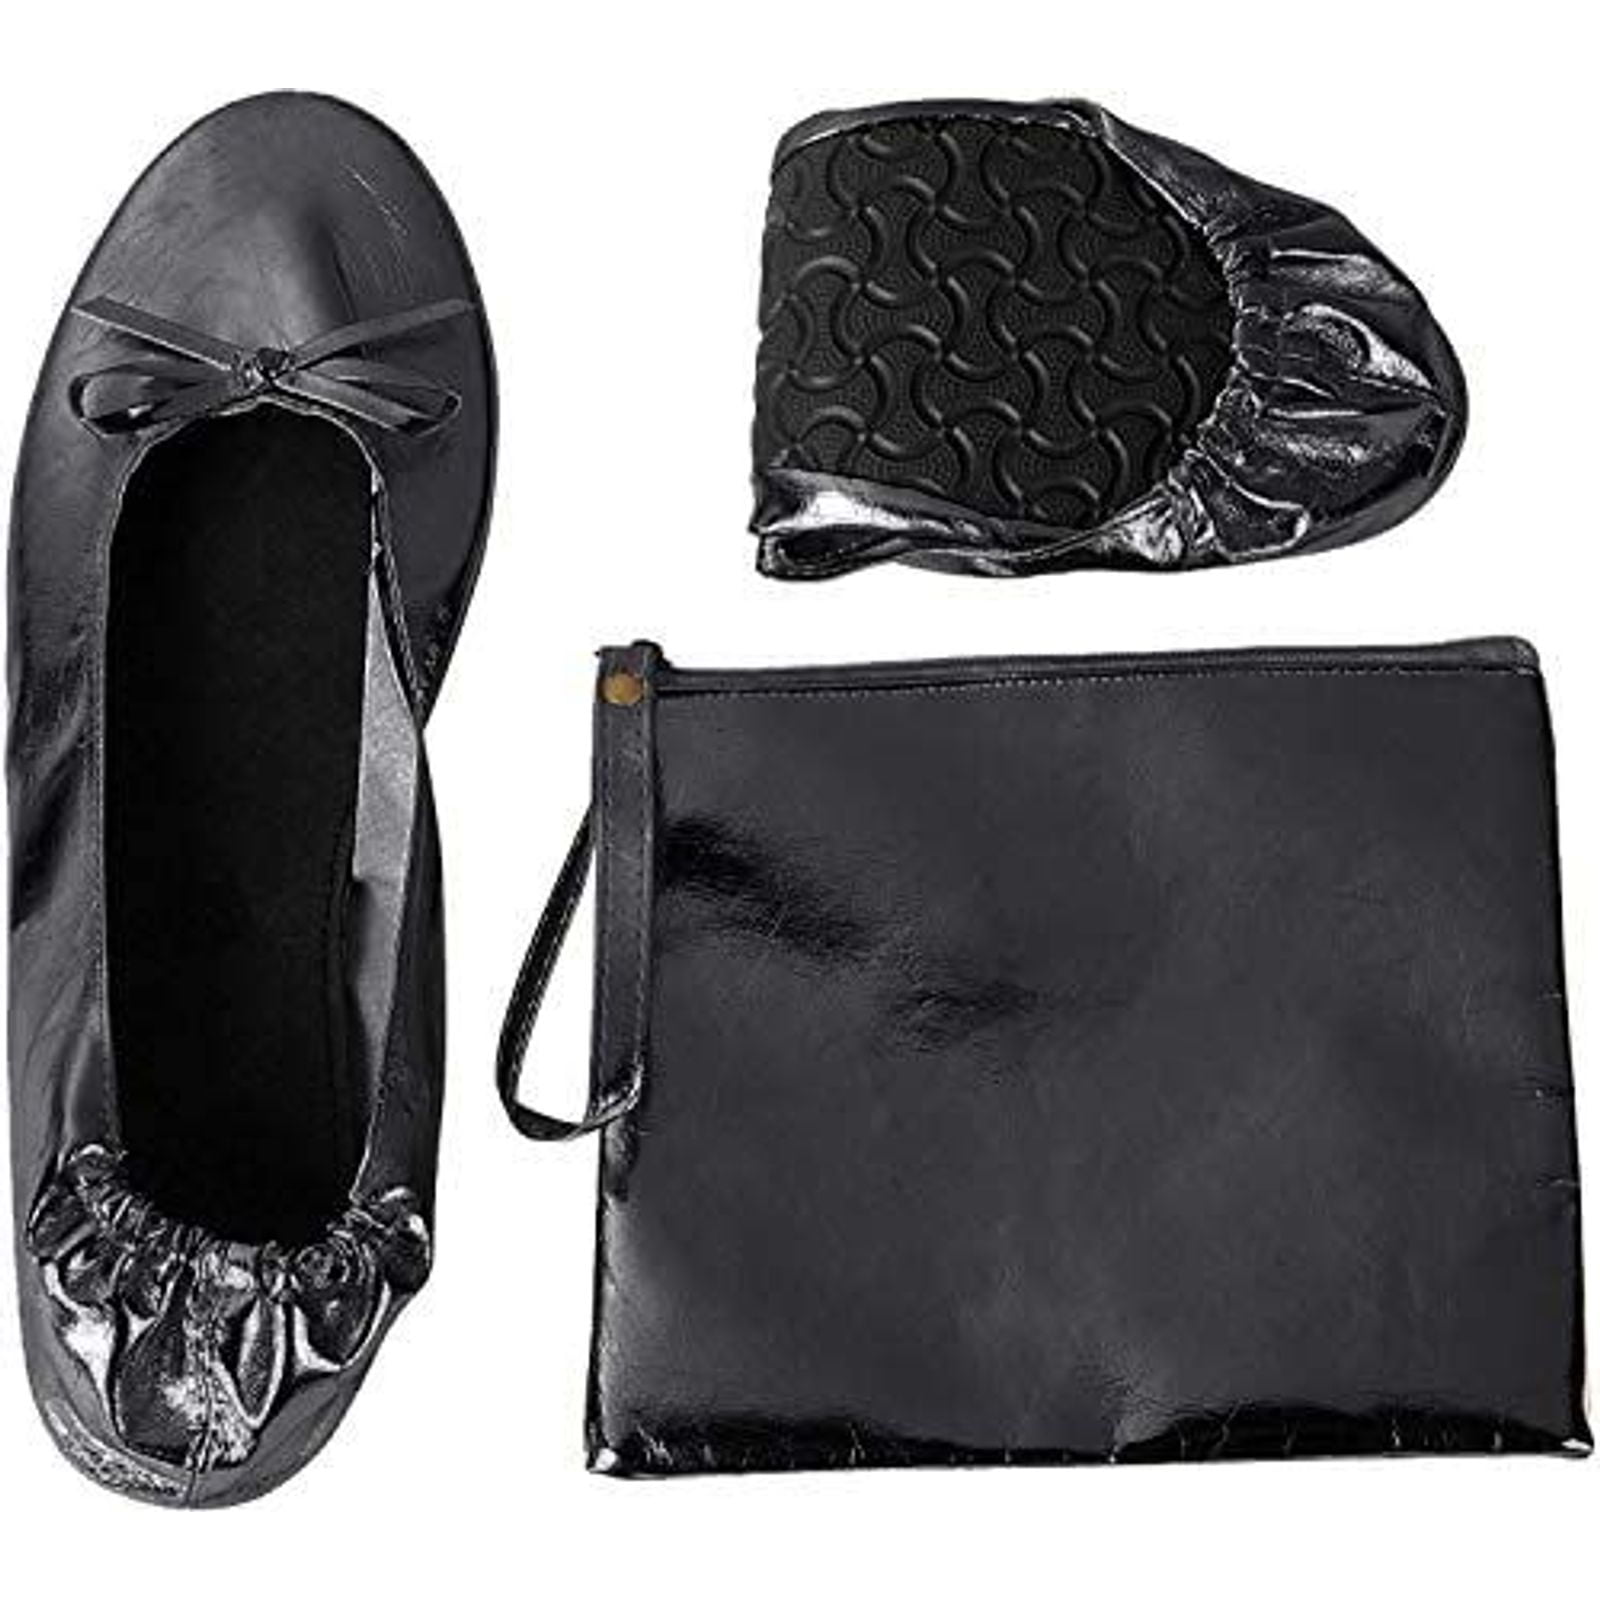 Women's Ballet Shoes Foldable Portable Travel Ballet Flat Roll Slipper Shoes Dance Party Shoes Black& Wine